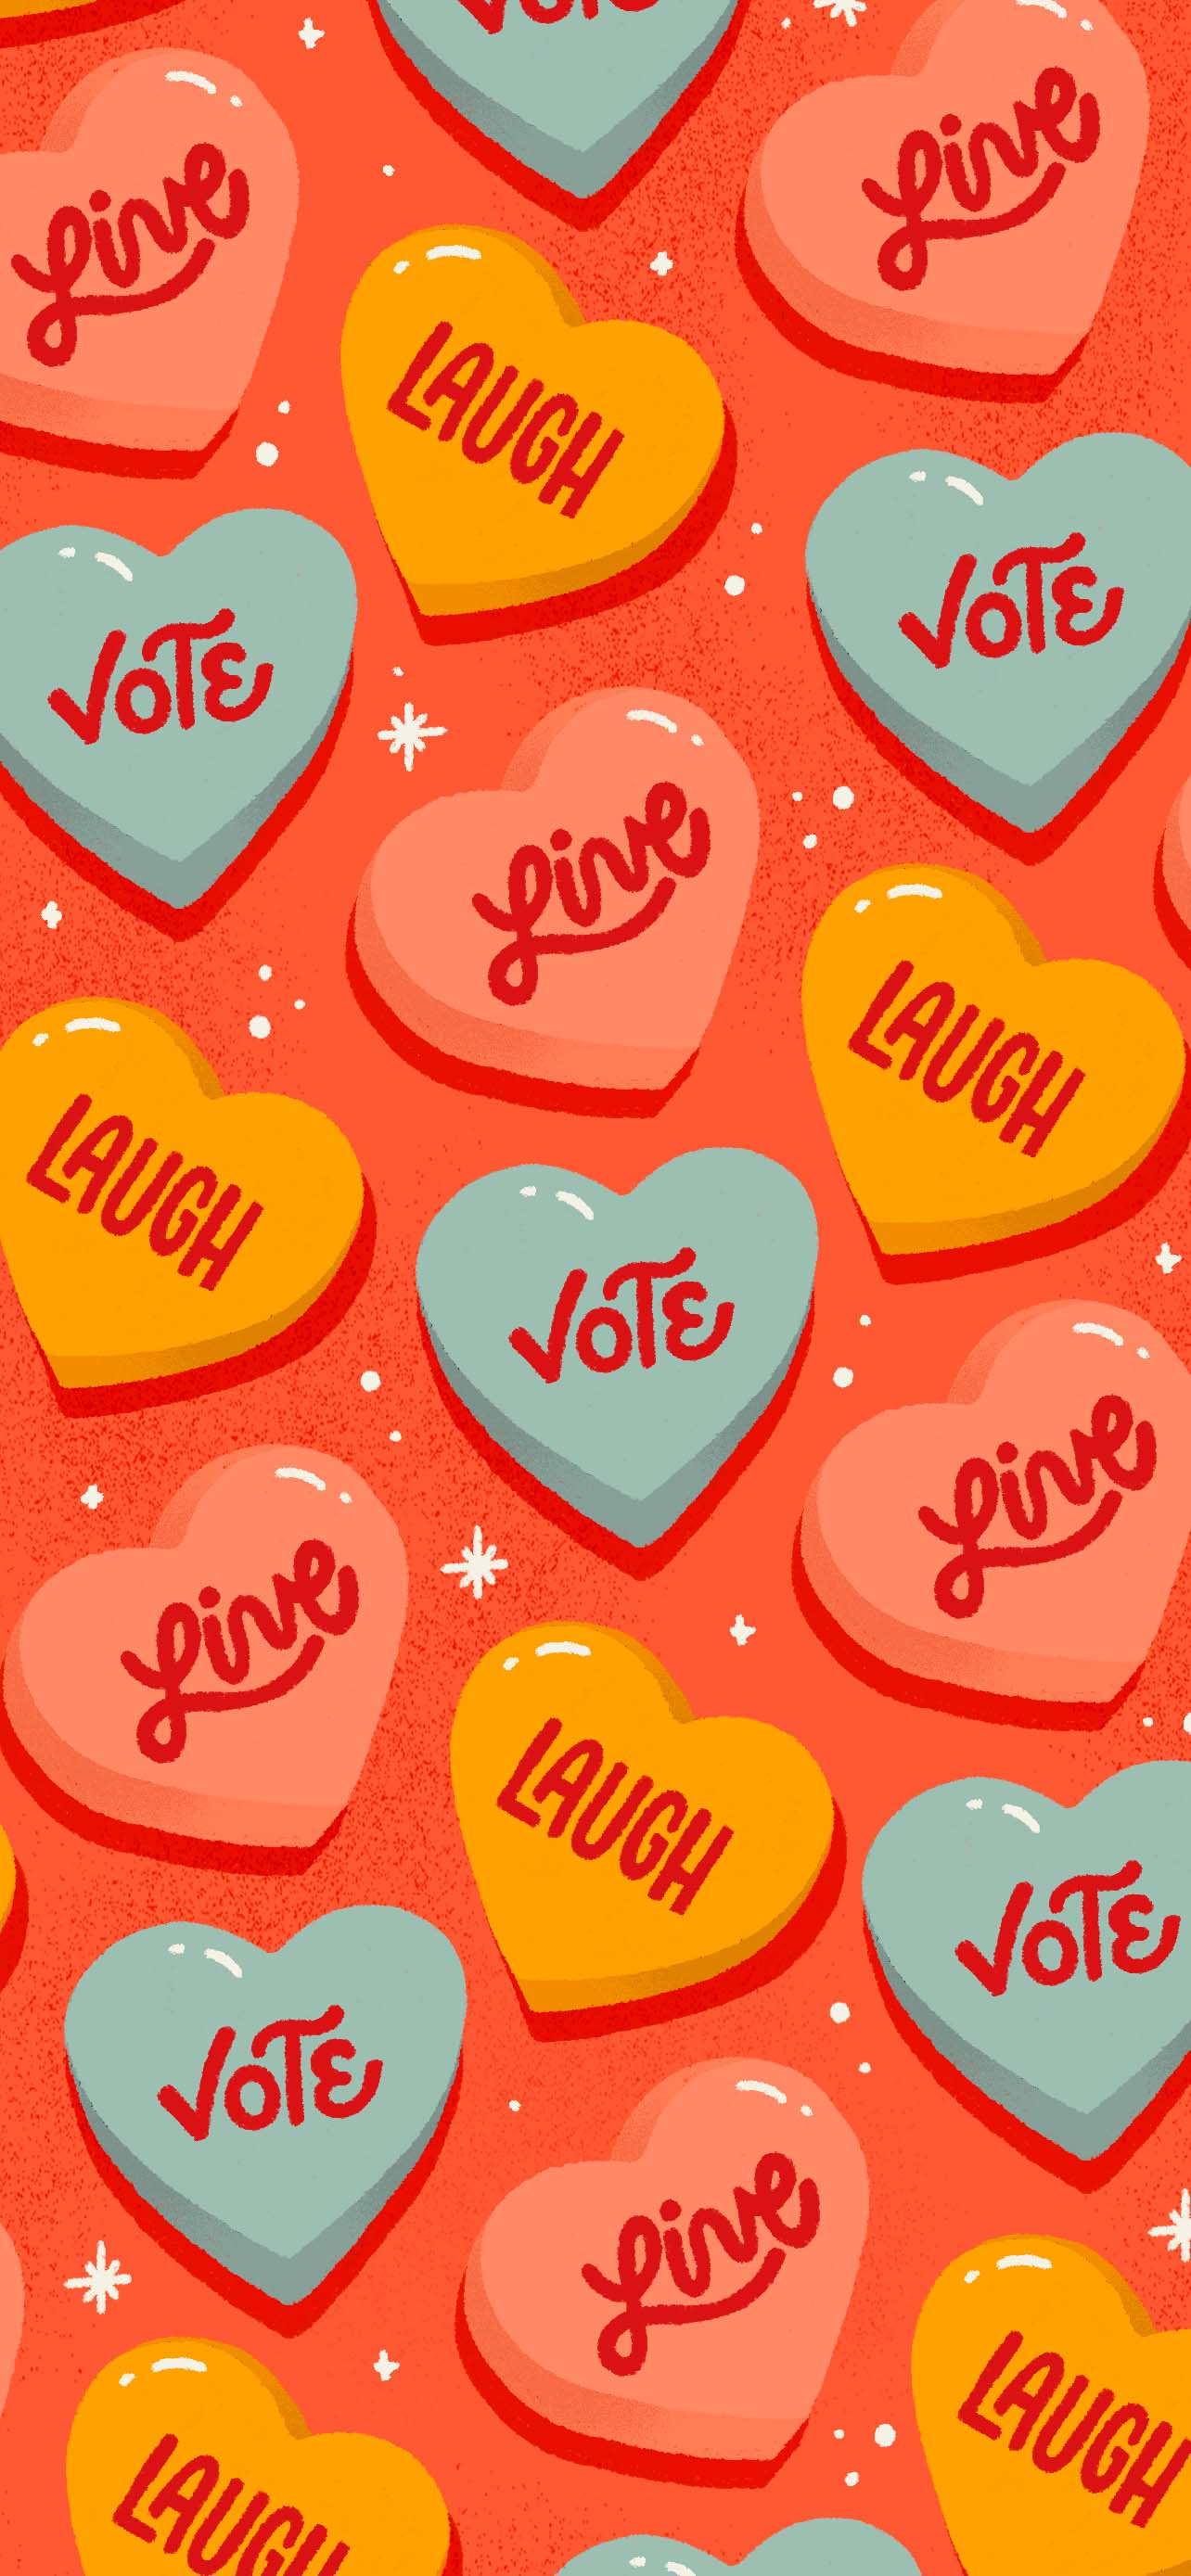 Wallpaper phone background valentines day love vote laugh - Texas